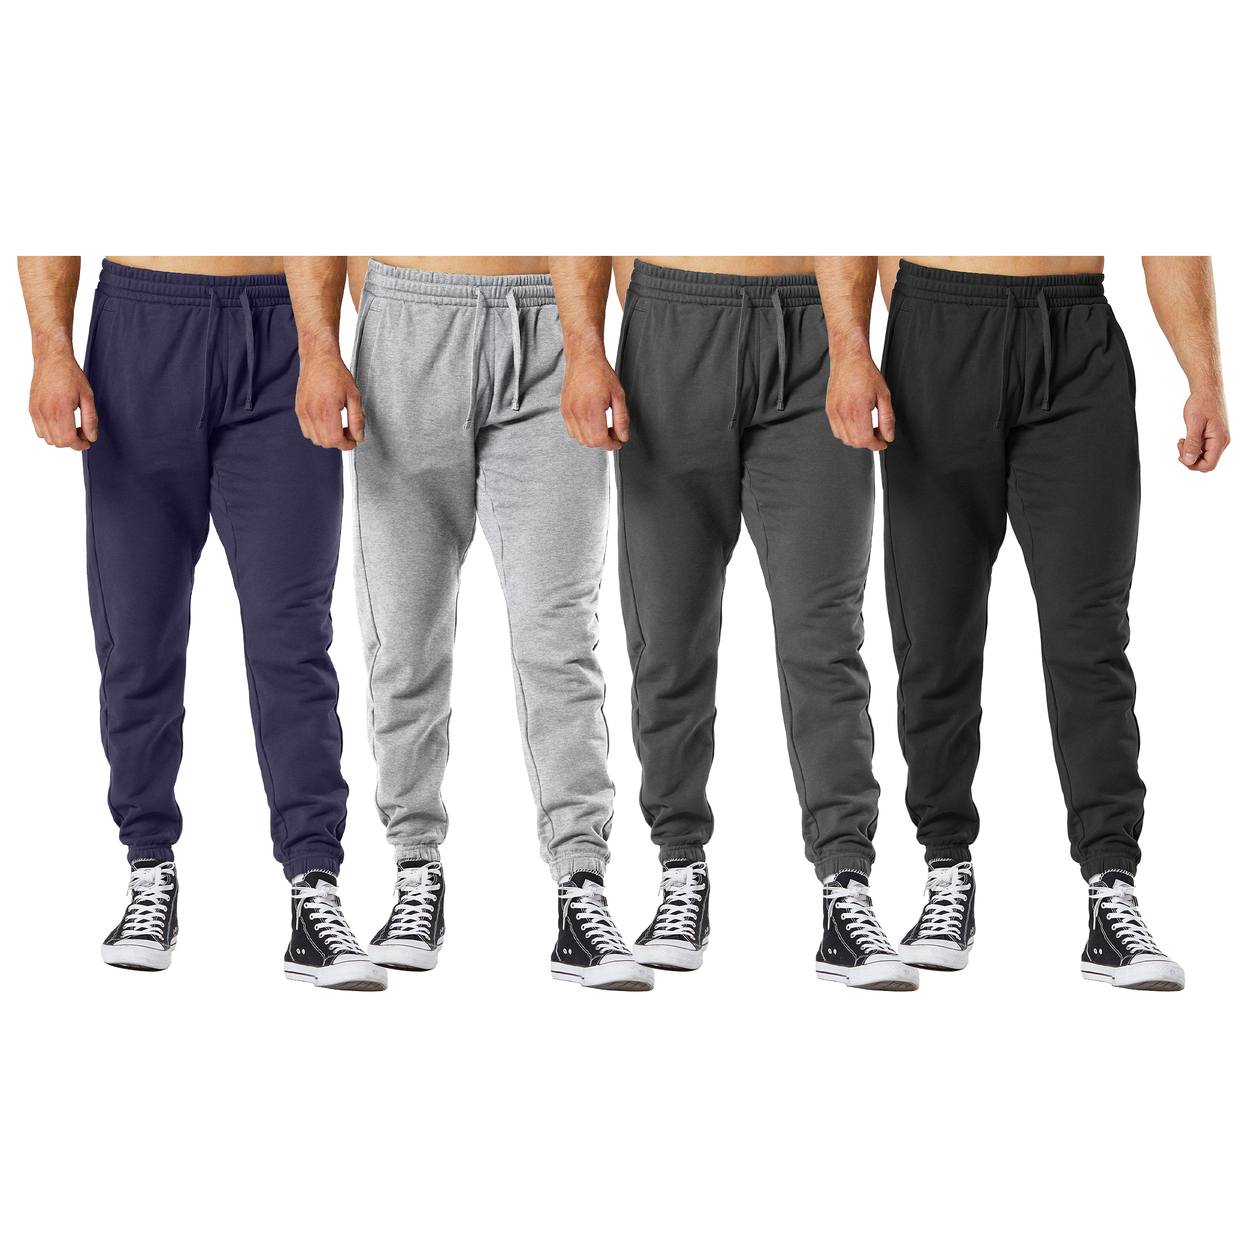 Men's Ultra-Soft Cozy Winter Warm Casual Fleece Lined Sweatpants Jogger - Grey, Medium